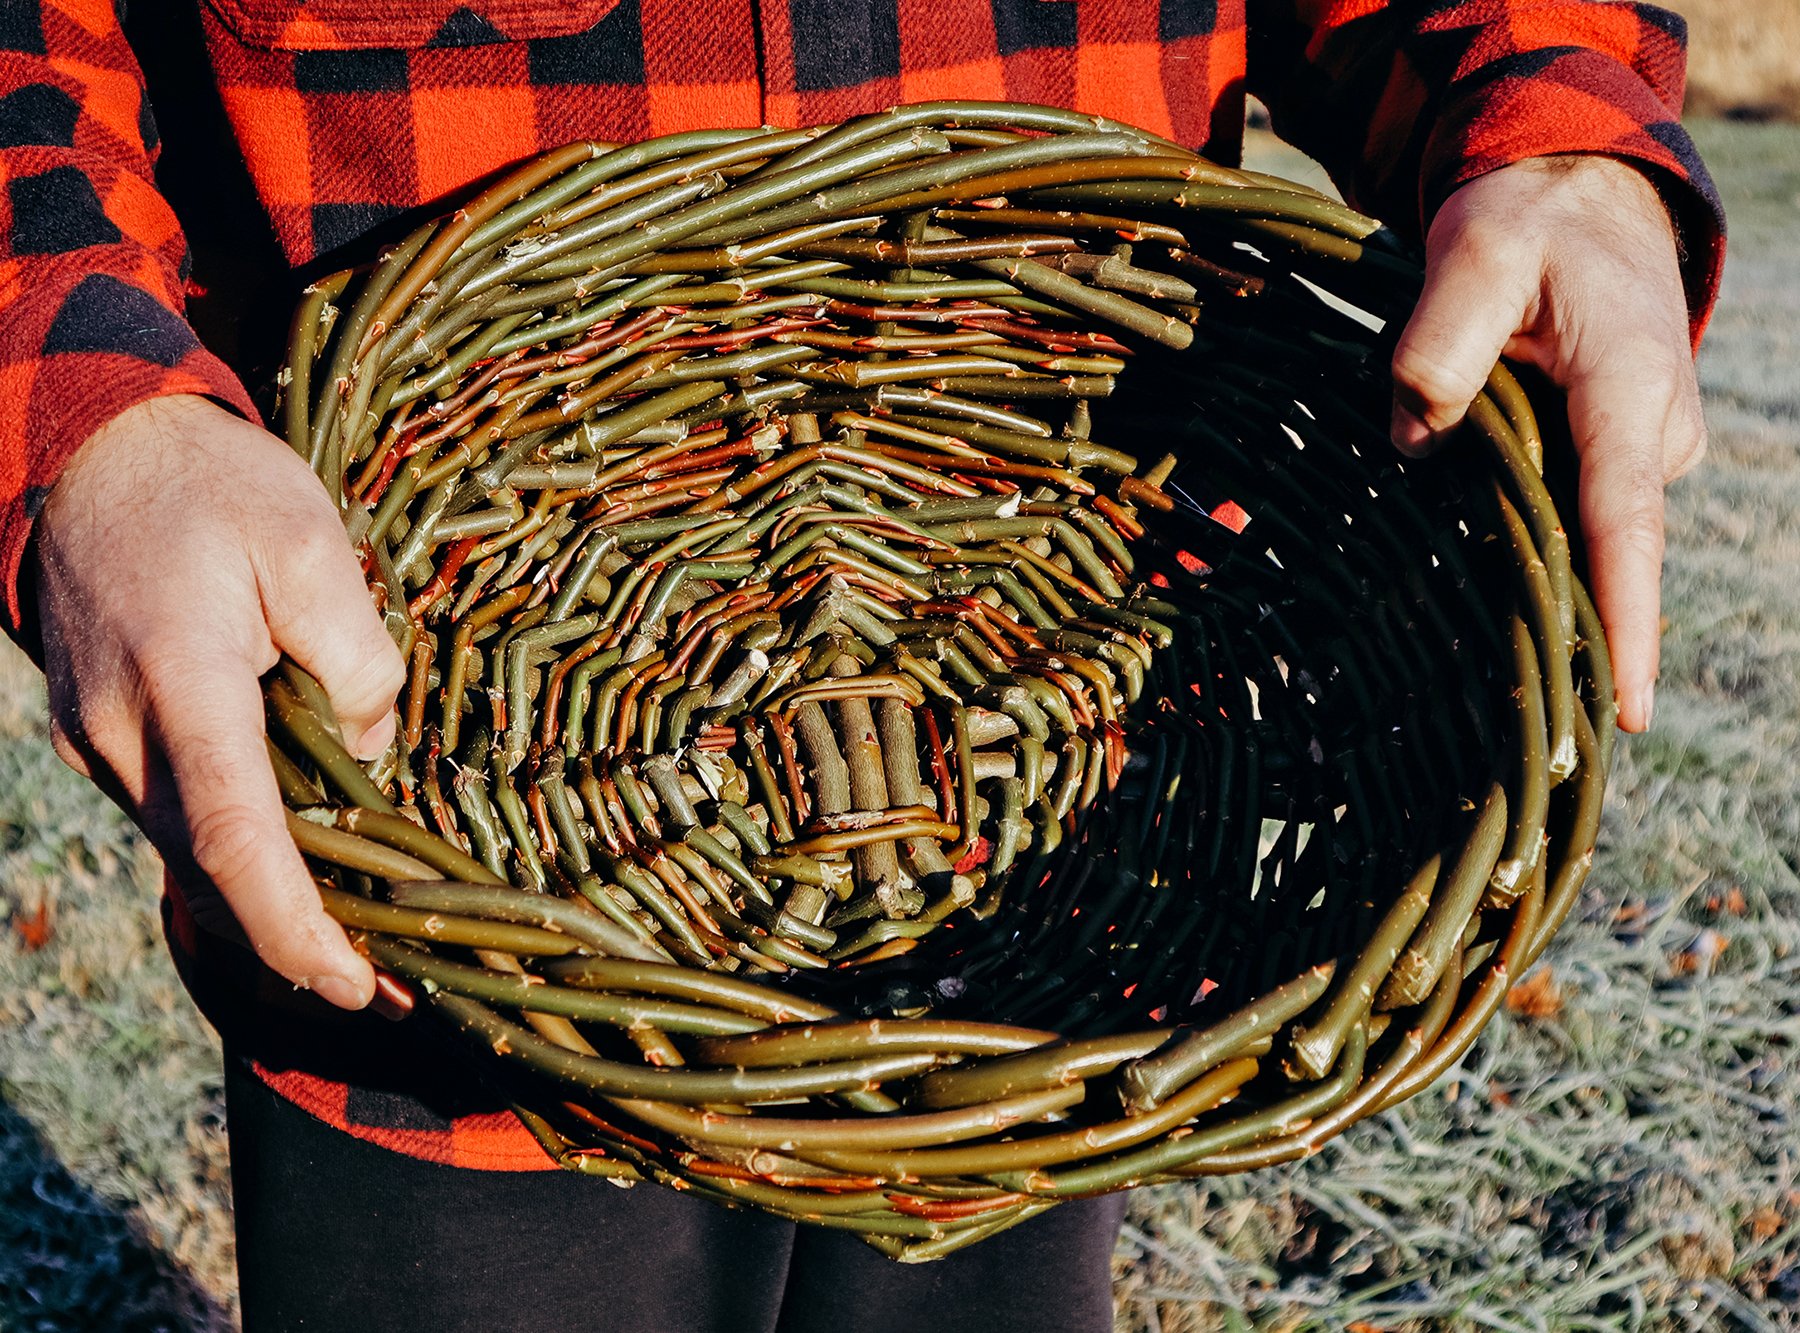 dan with willow basket-1-w.jpg